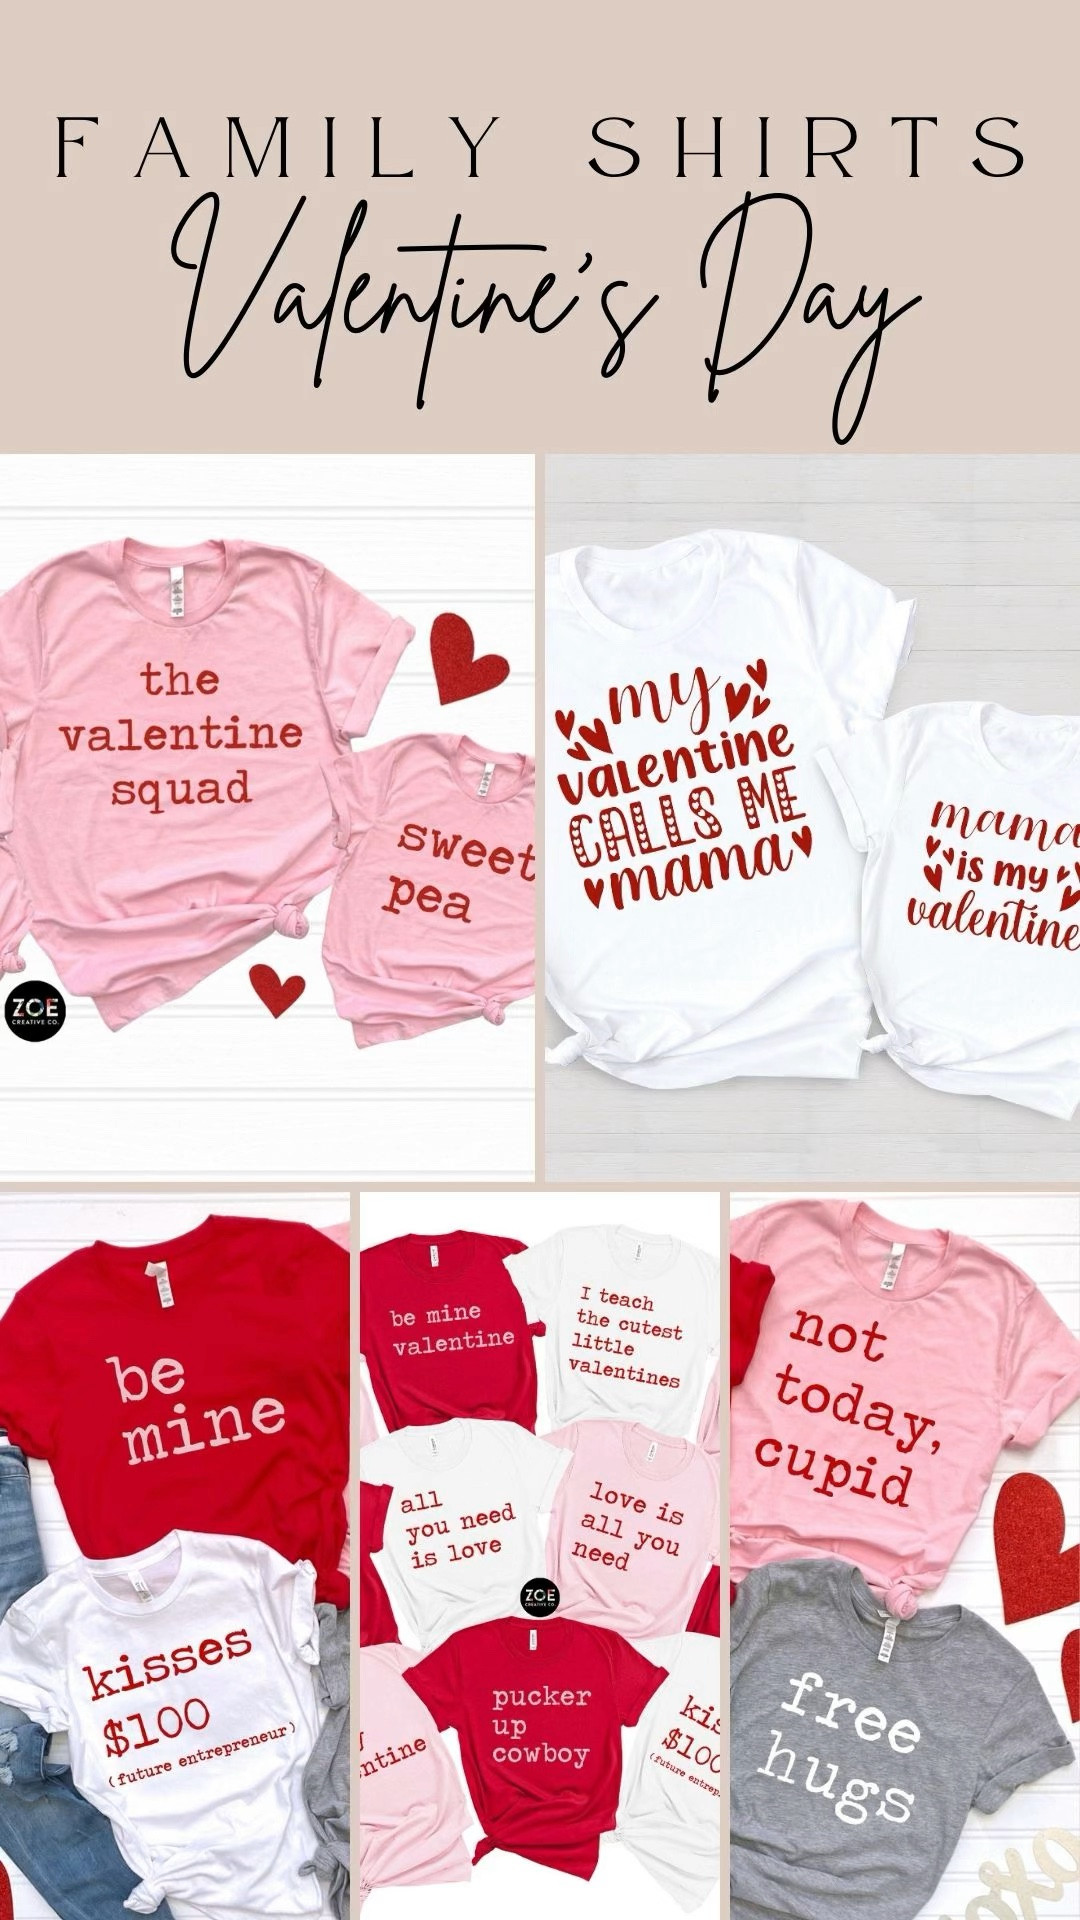 I Teach the Cutest Little Valentines Pink Shirt